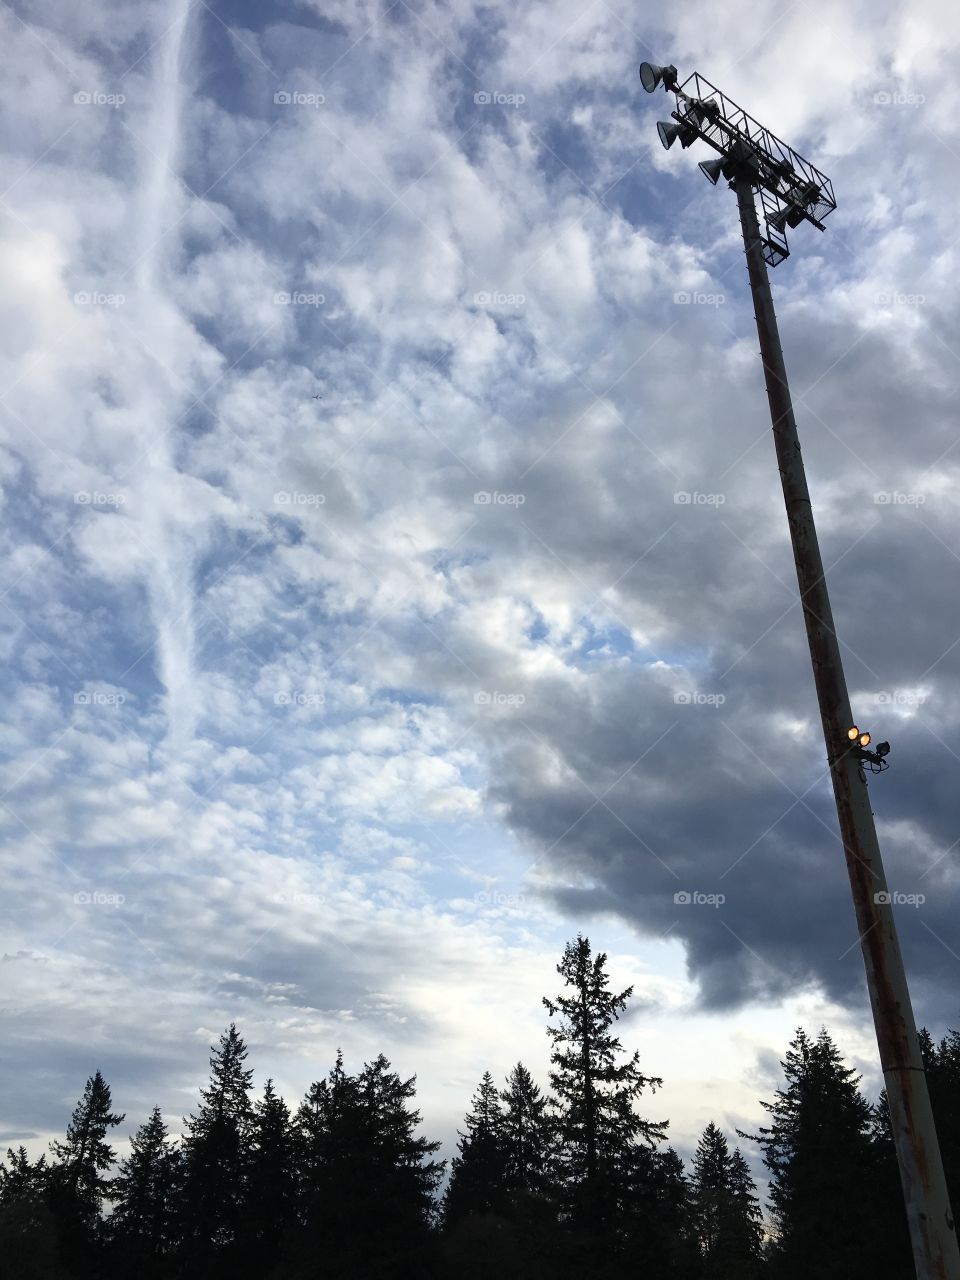 Clouds with stadium light